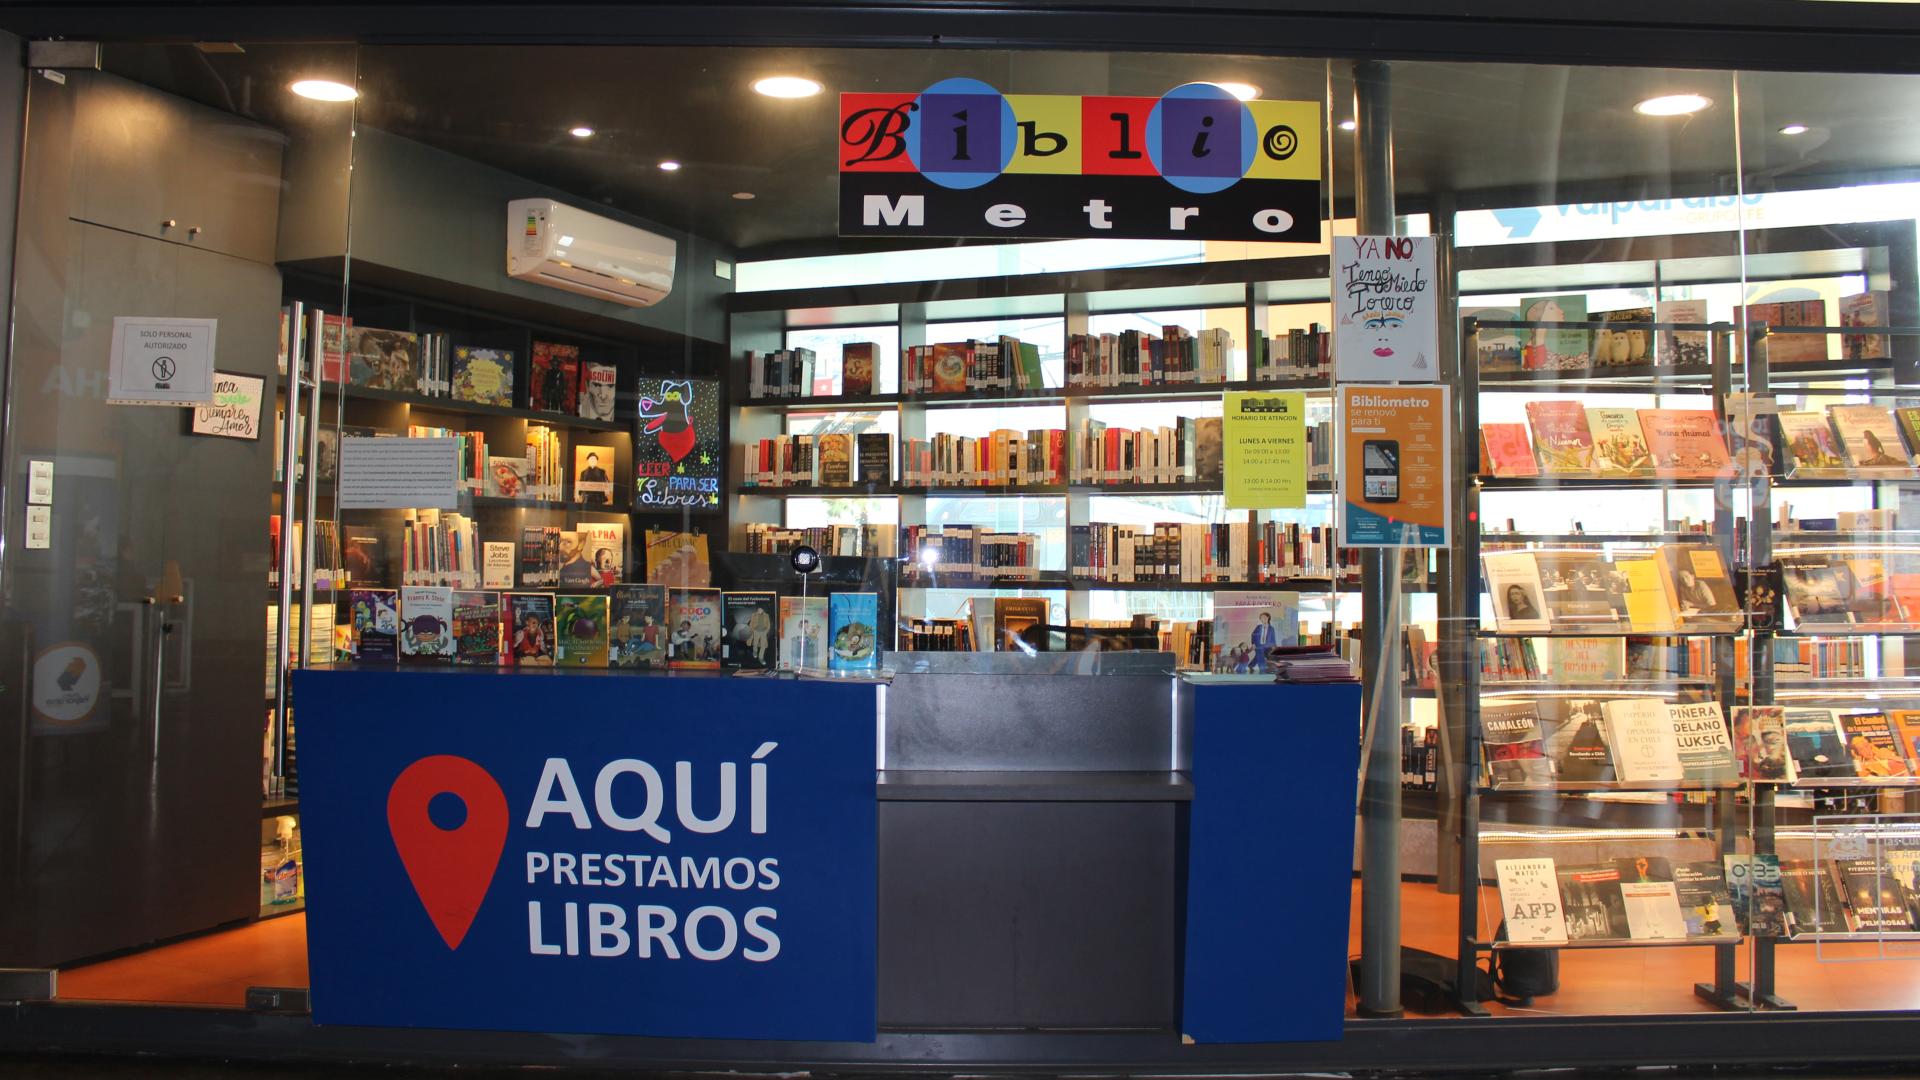 Bibliometro_Valparaiso